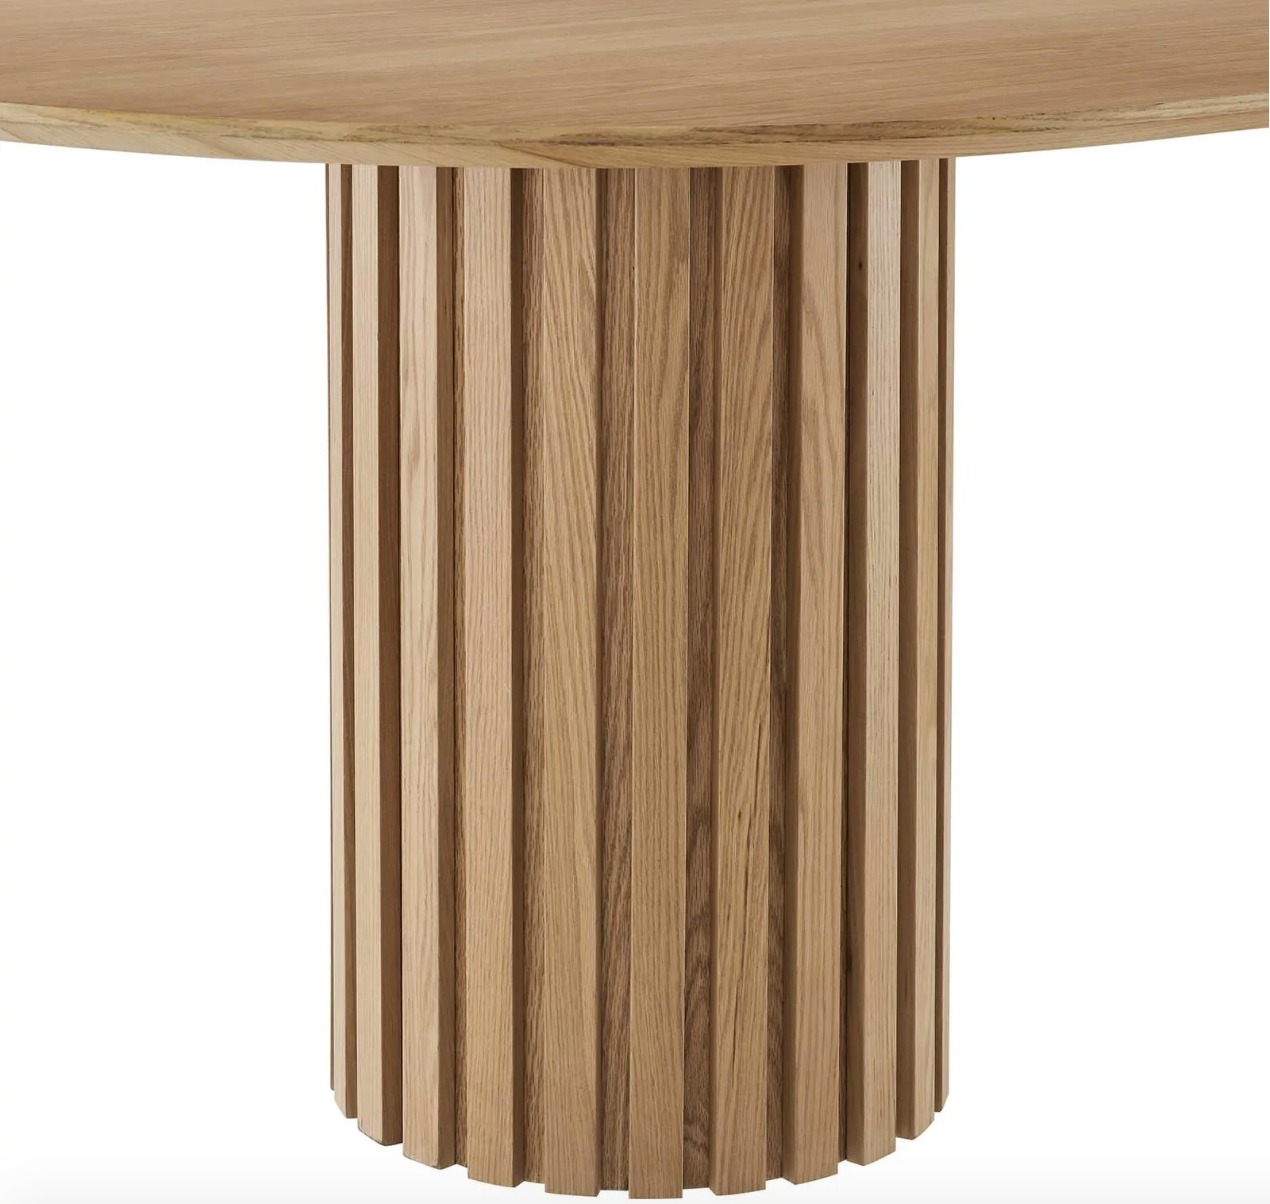 Senja Round Dining Table - Oak